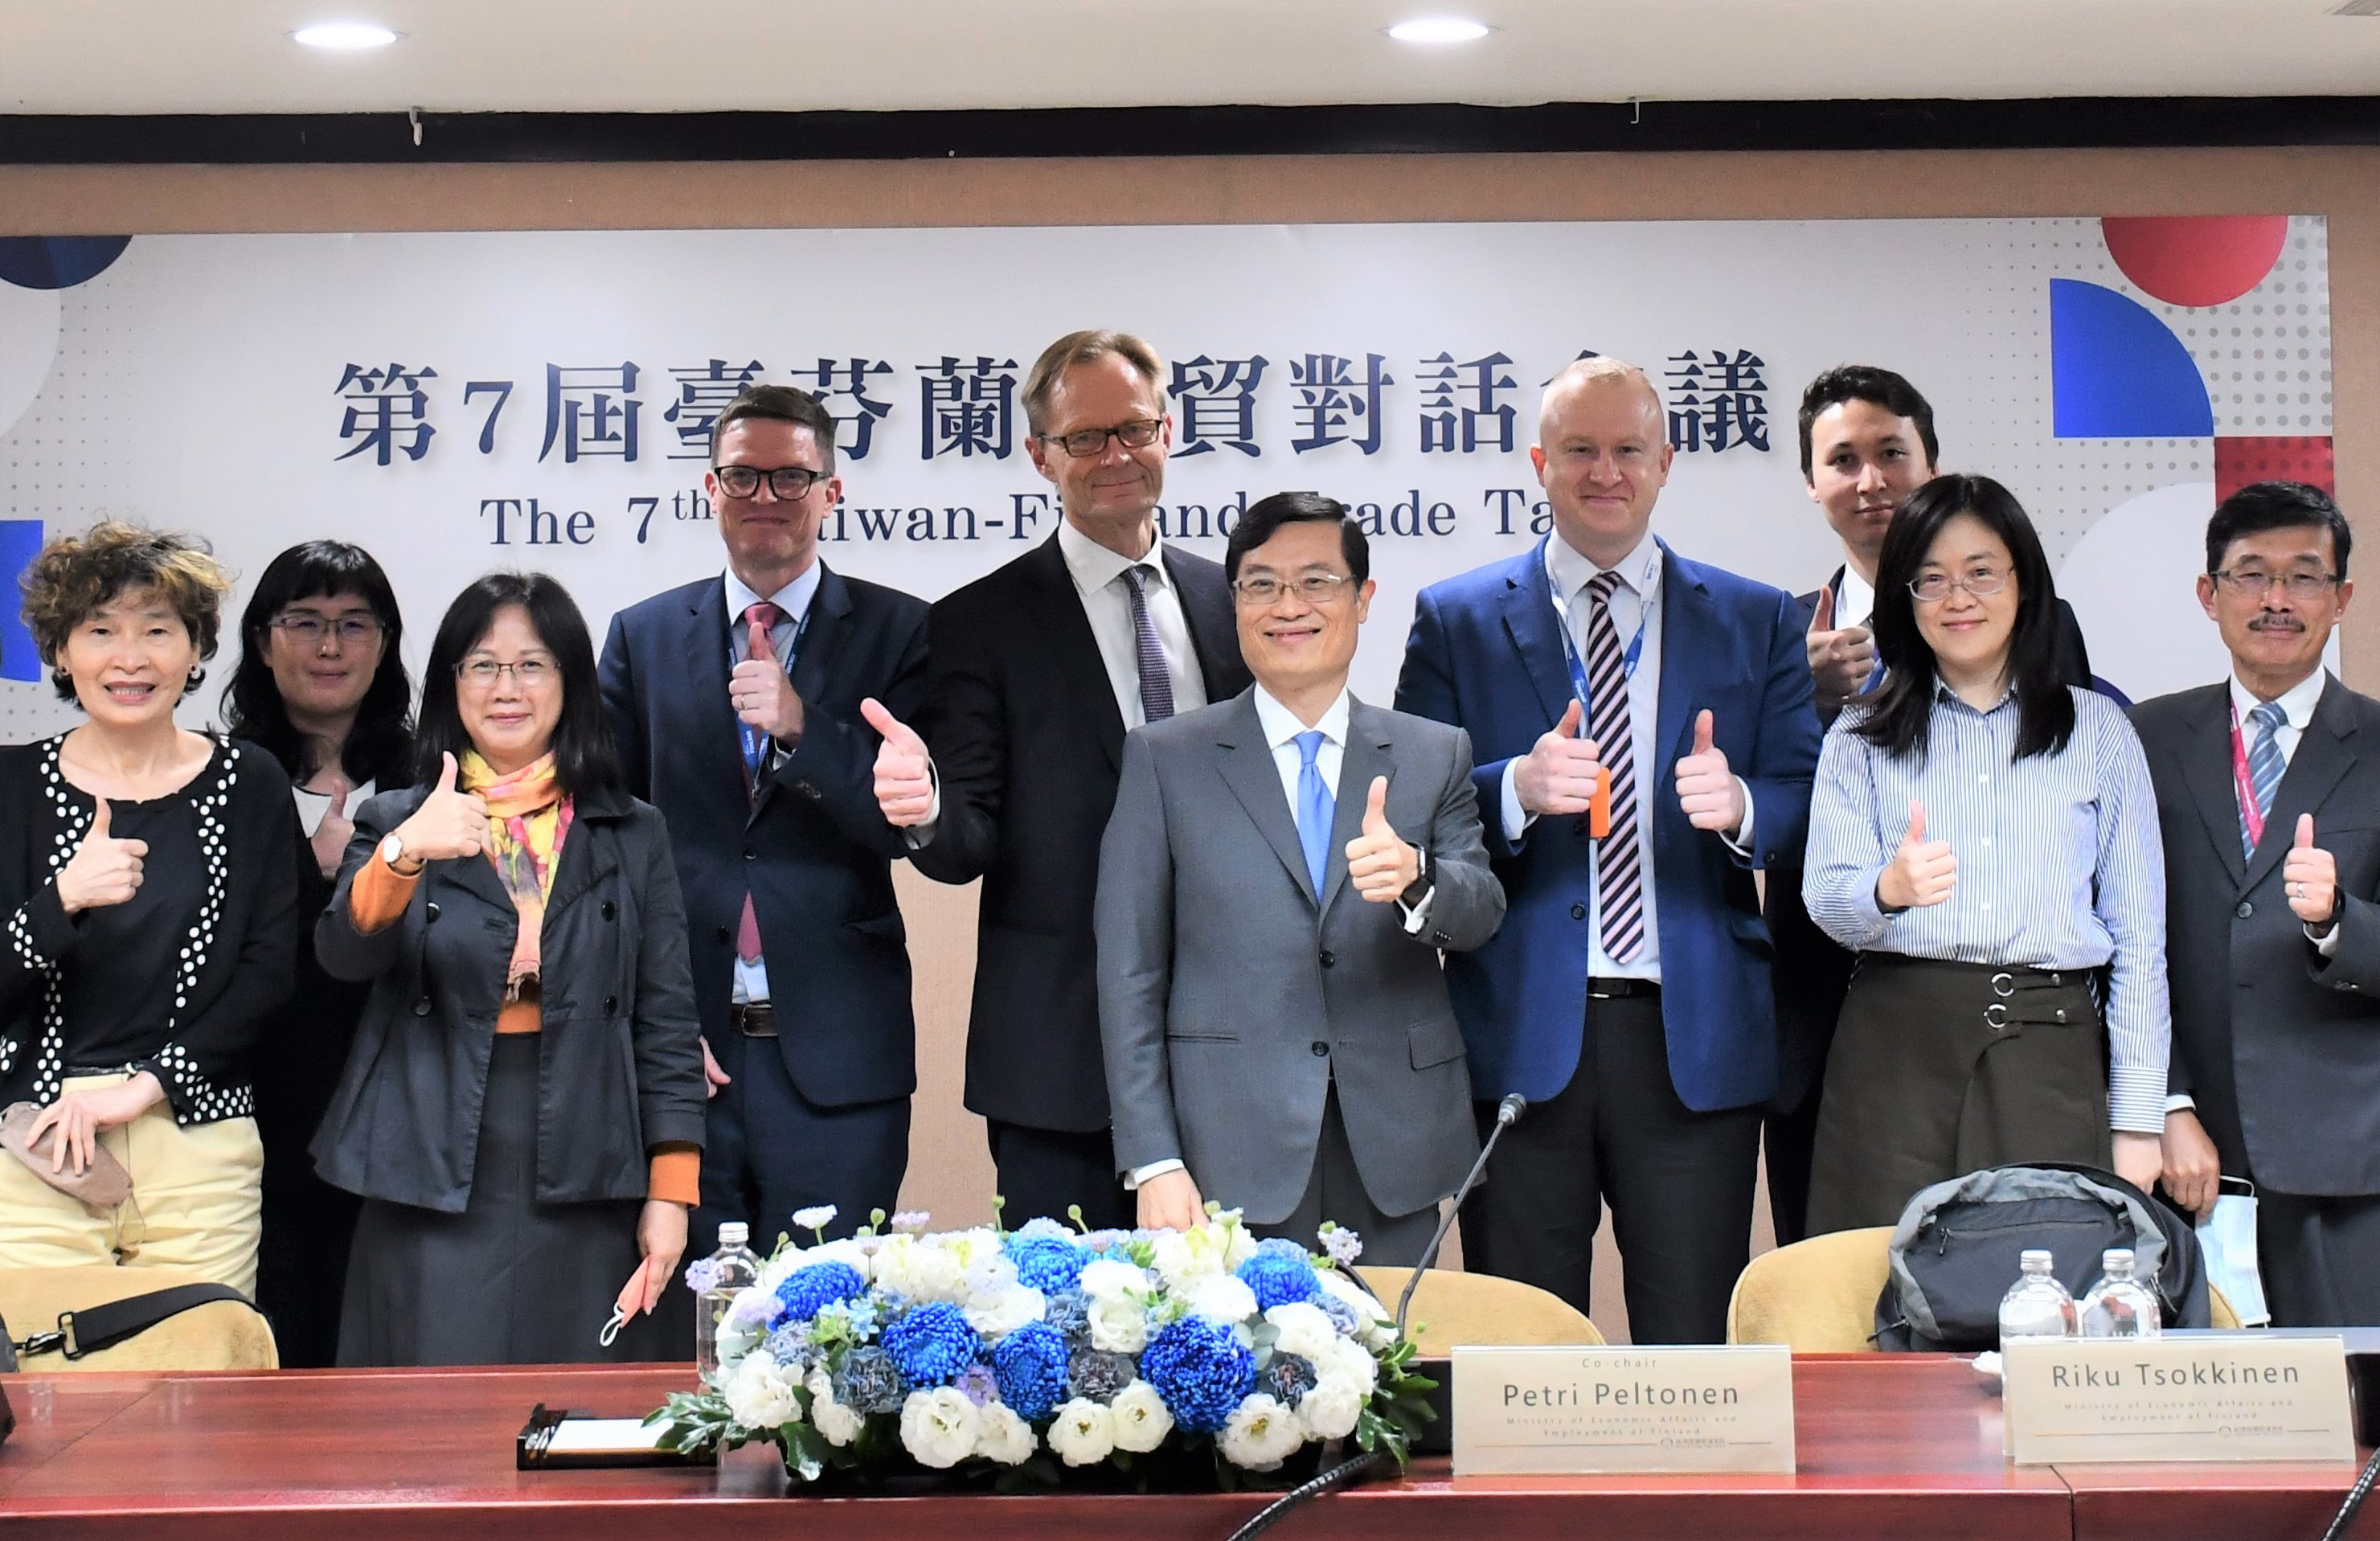 The 7th Taiwan-Finland trade talk deepen bilateral economic partnership